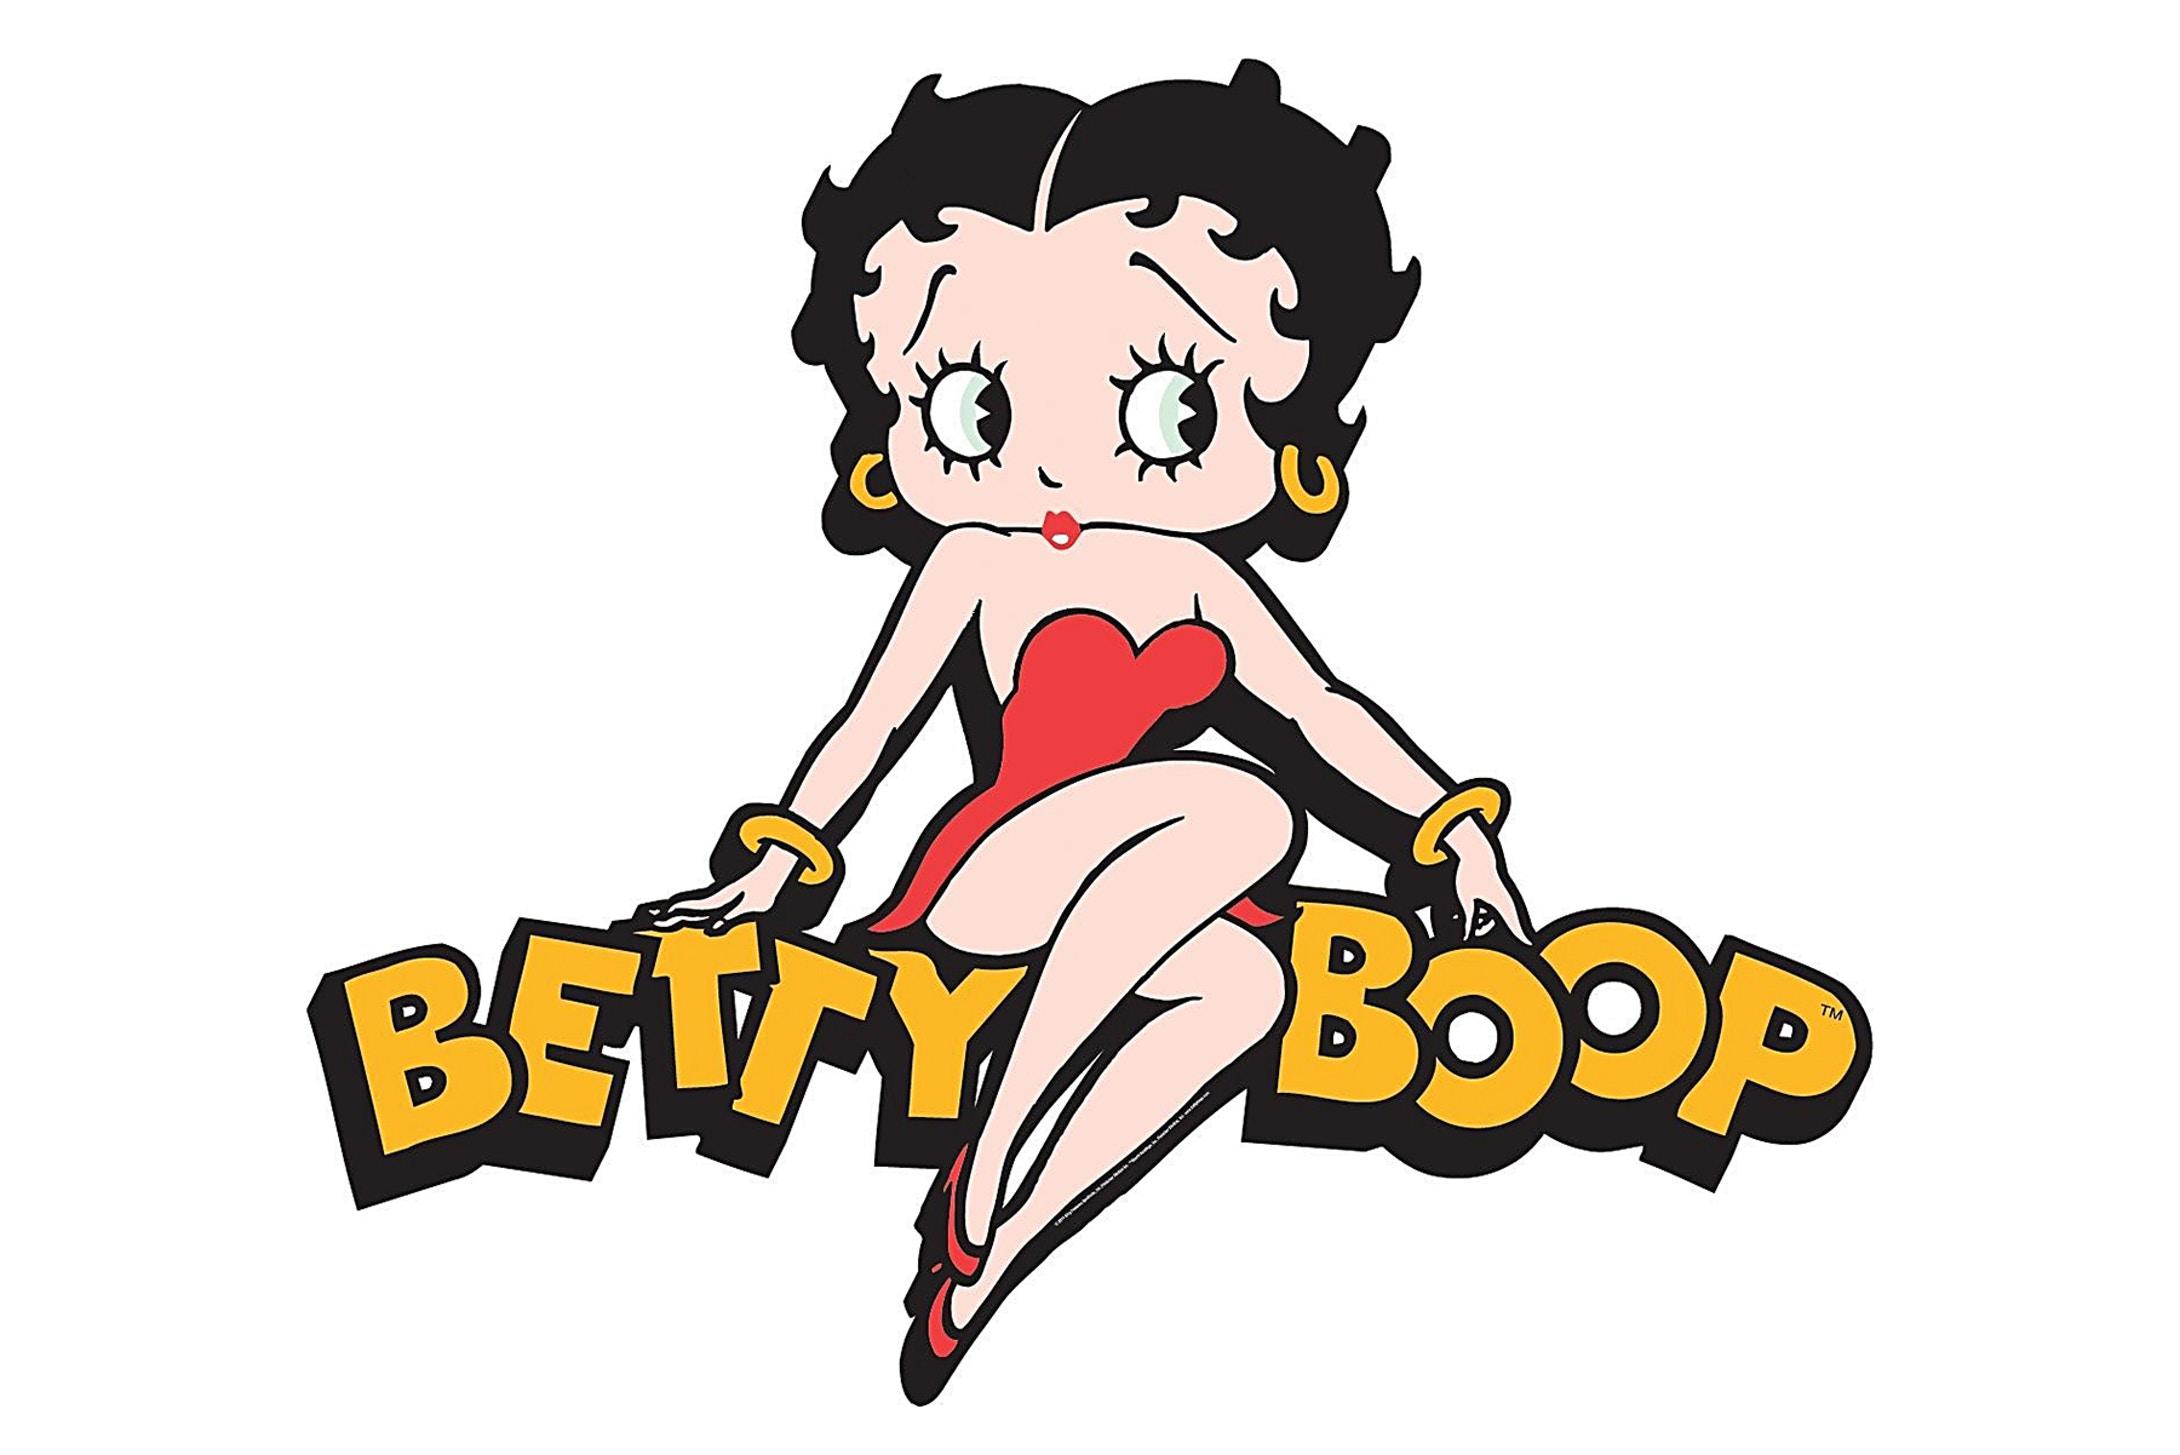 Bettyboop壁纸图片